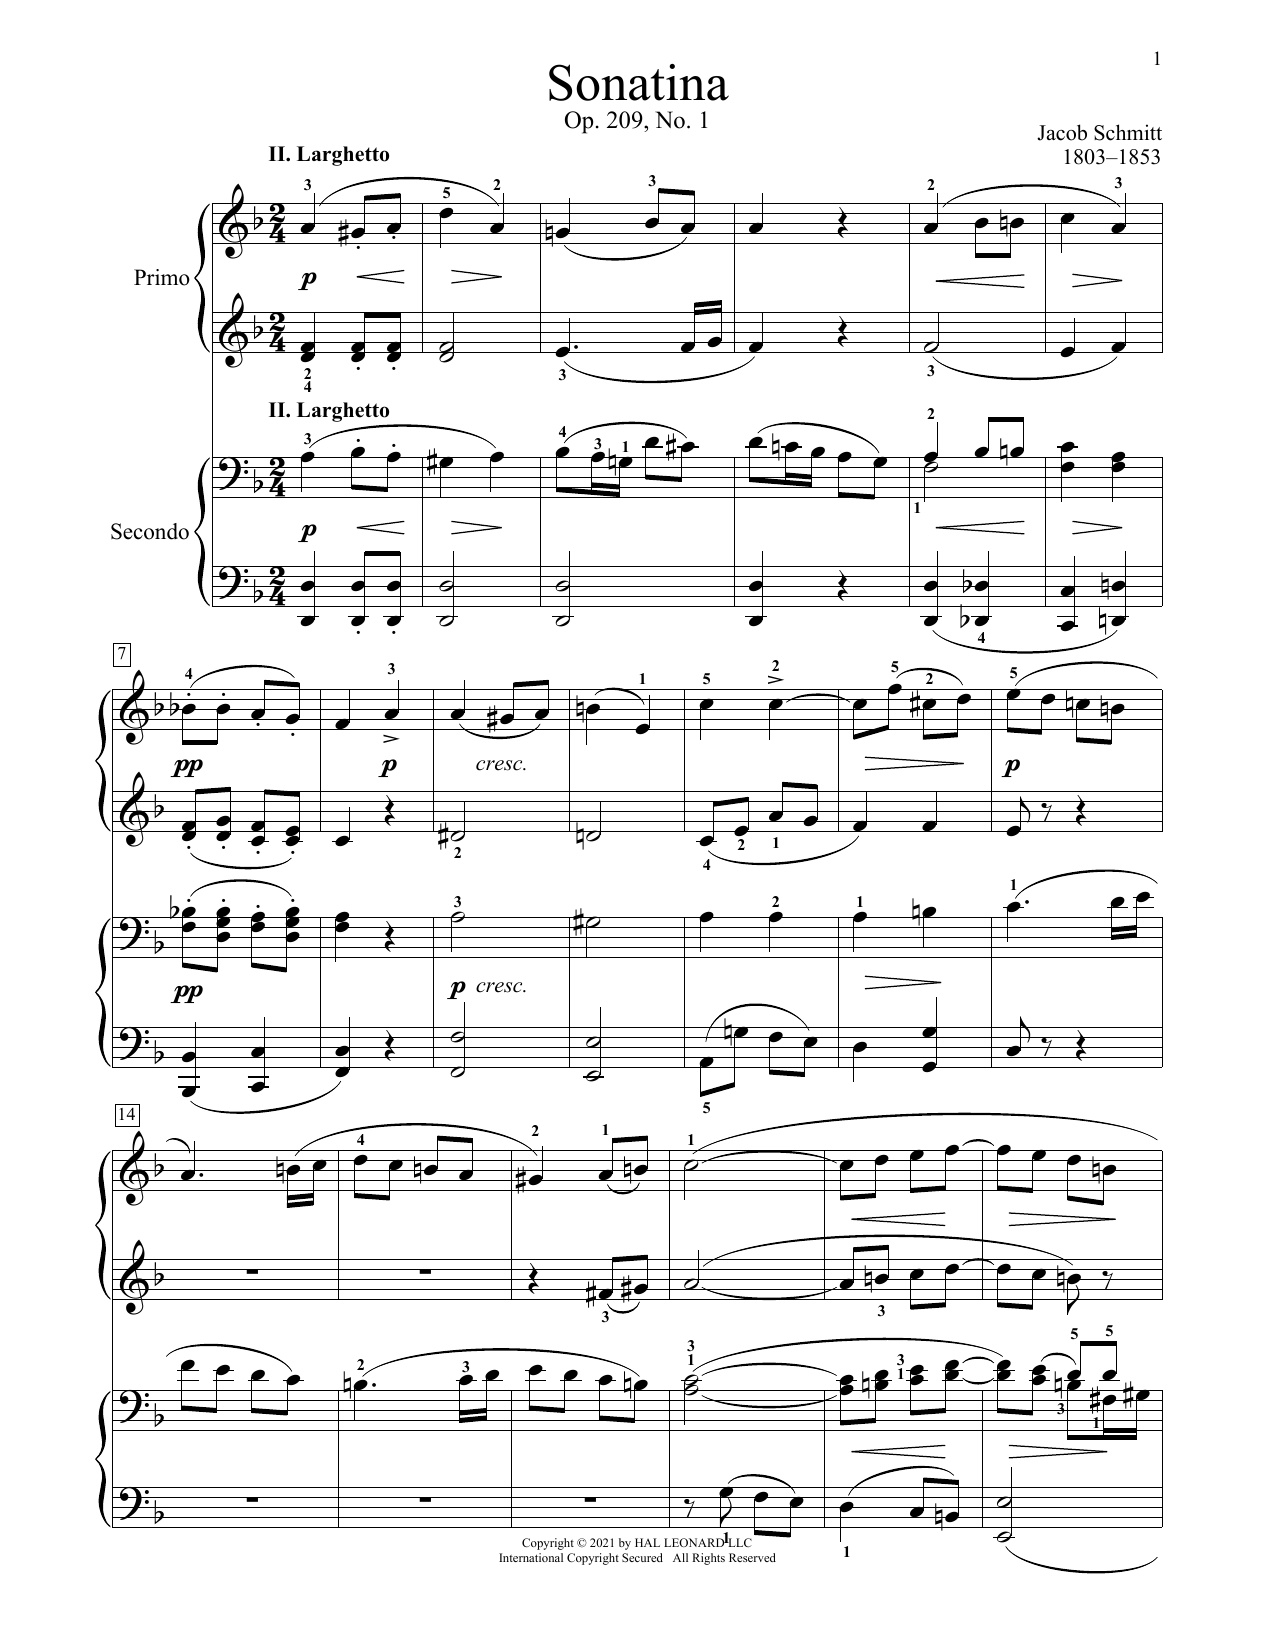 Jacob Schmitt Sonatina, Op. 209, No. 1, II. Larghetto Sheet Music Notes & Chords for Piano Duet - Download or Print PDF